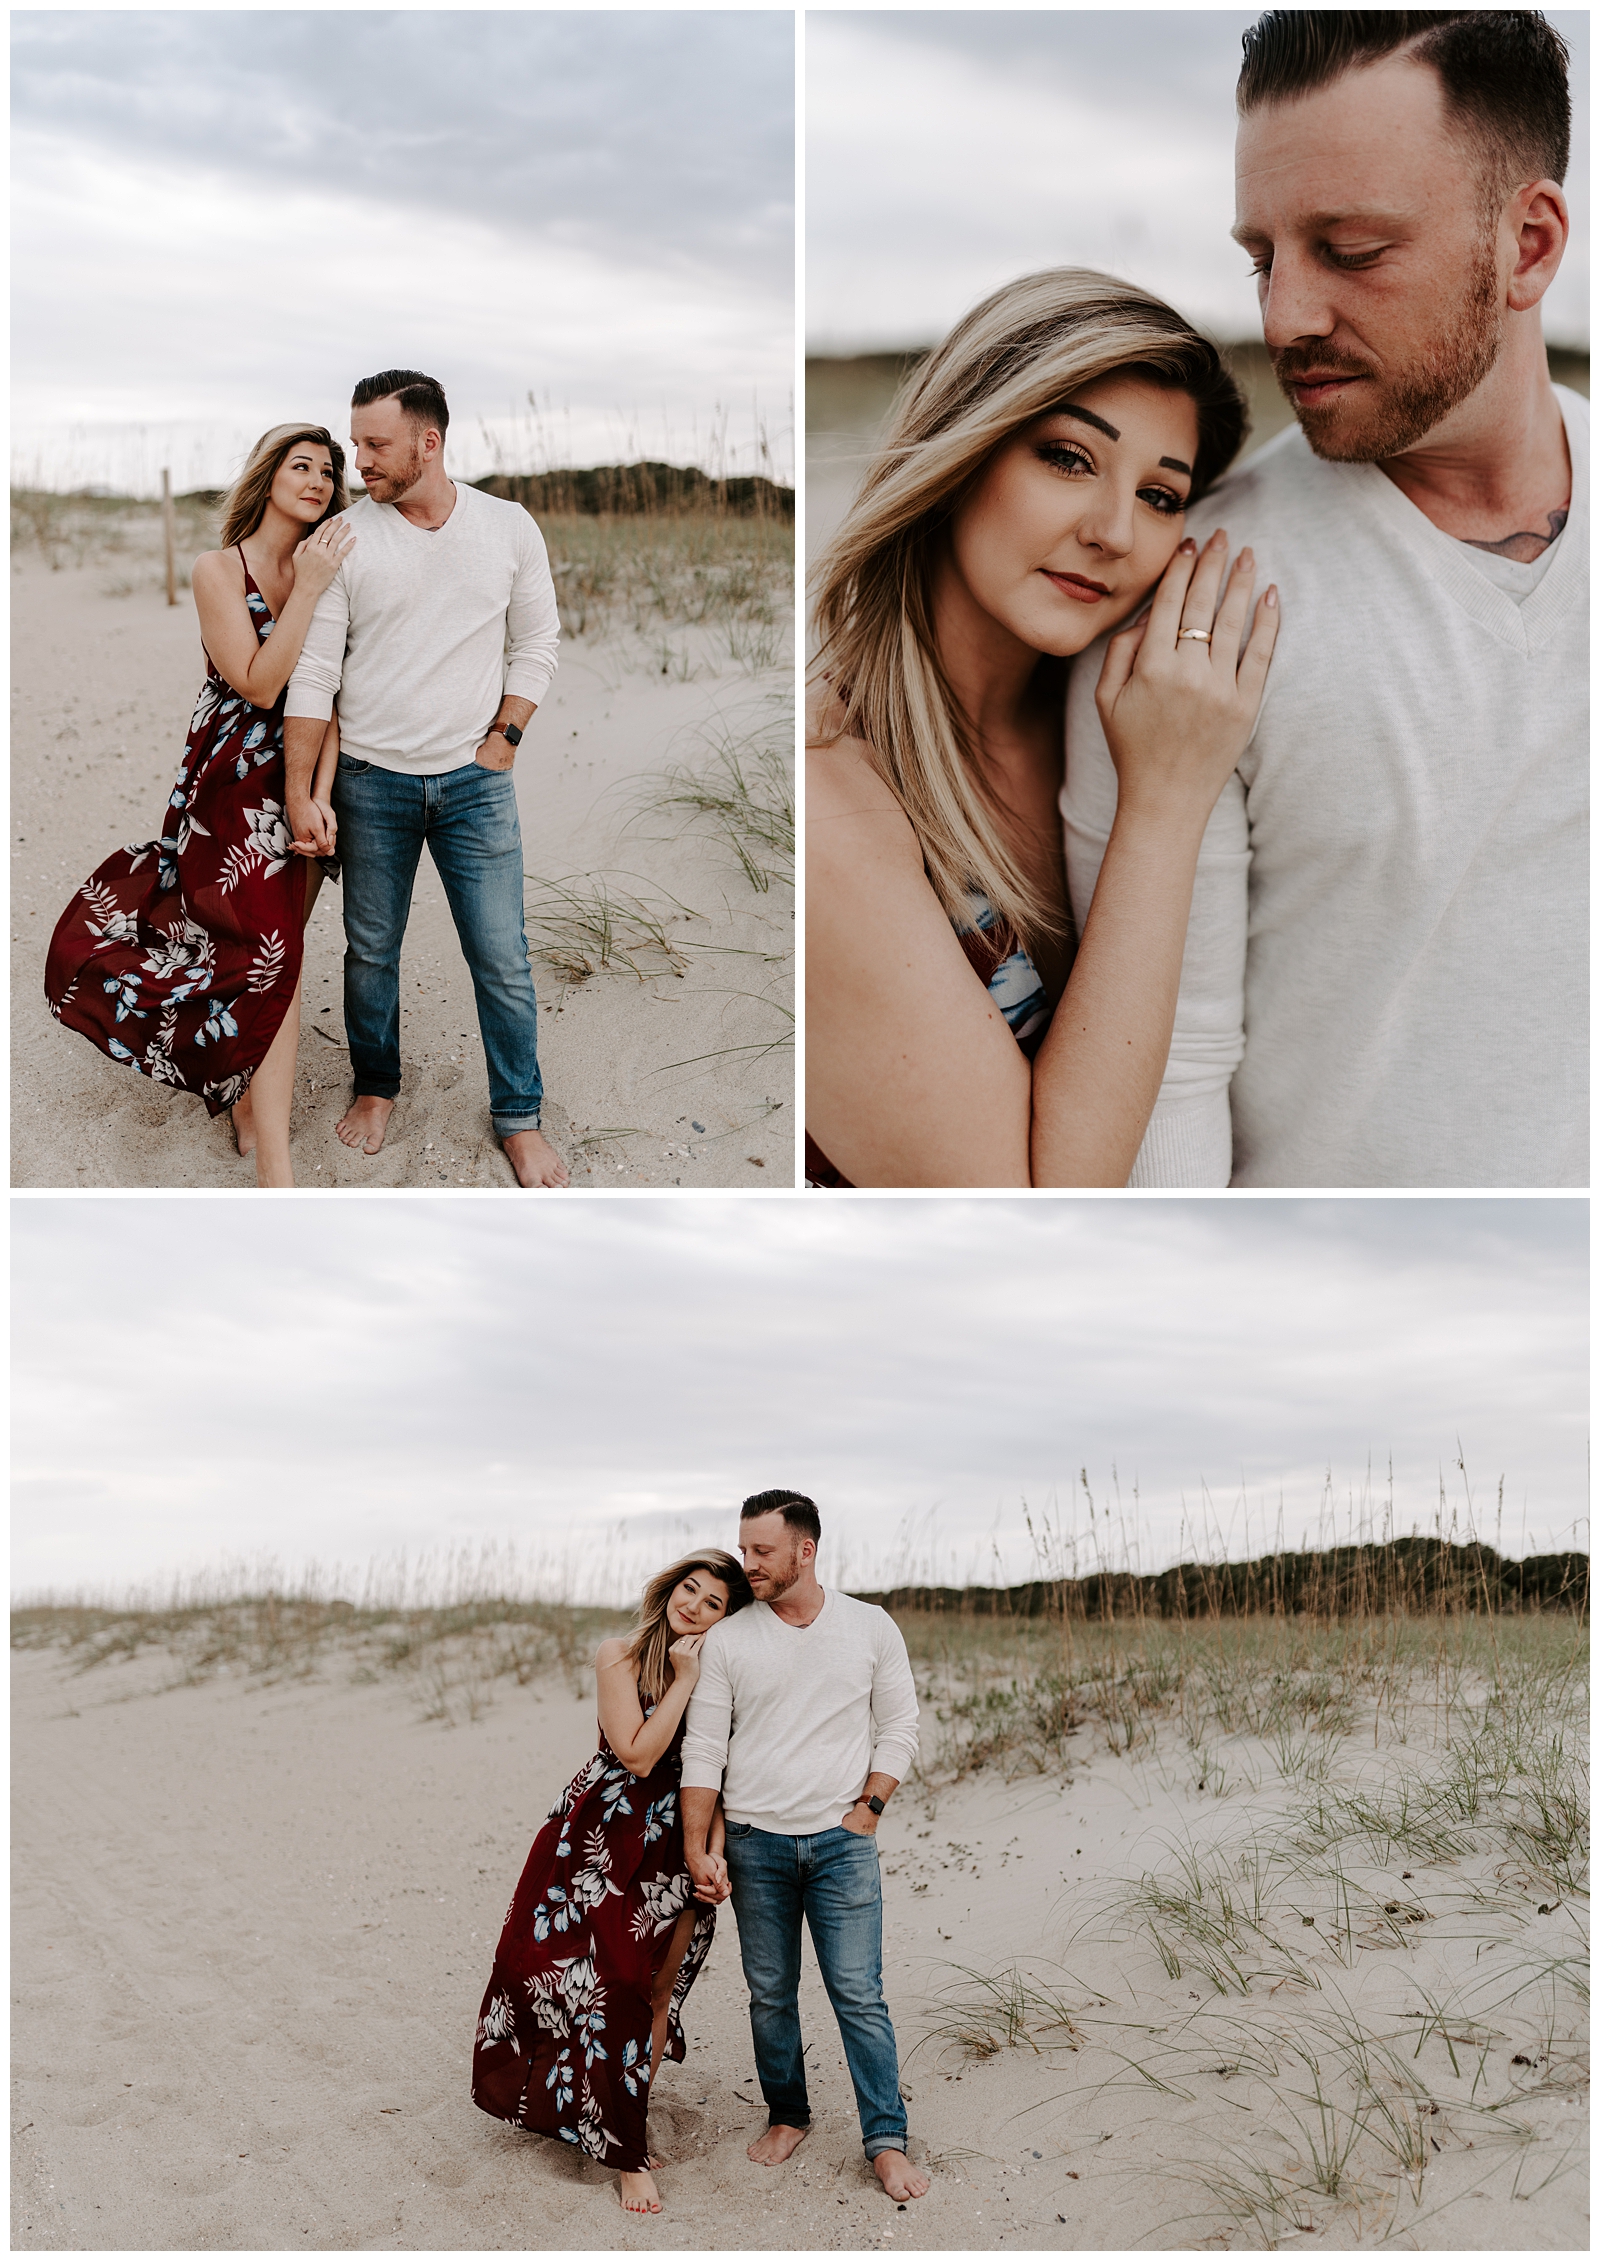 Romantic engagement photos at beach in North Carolina